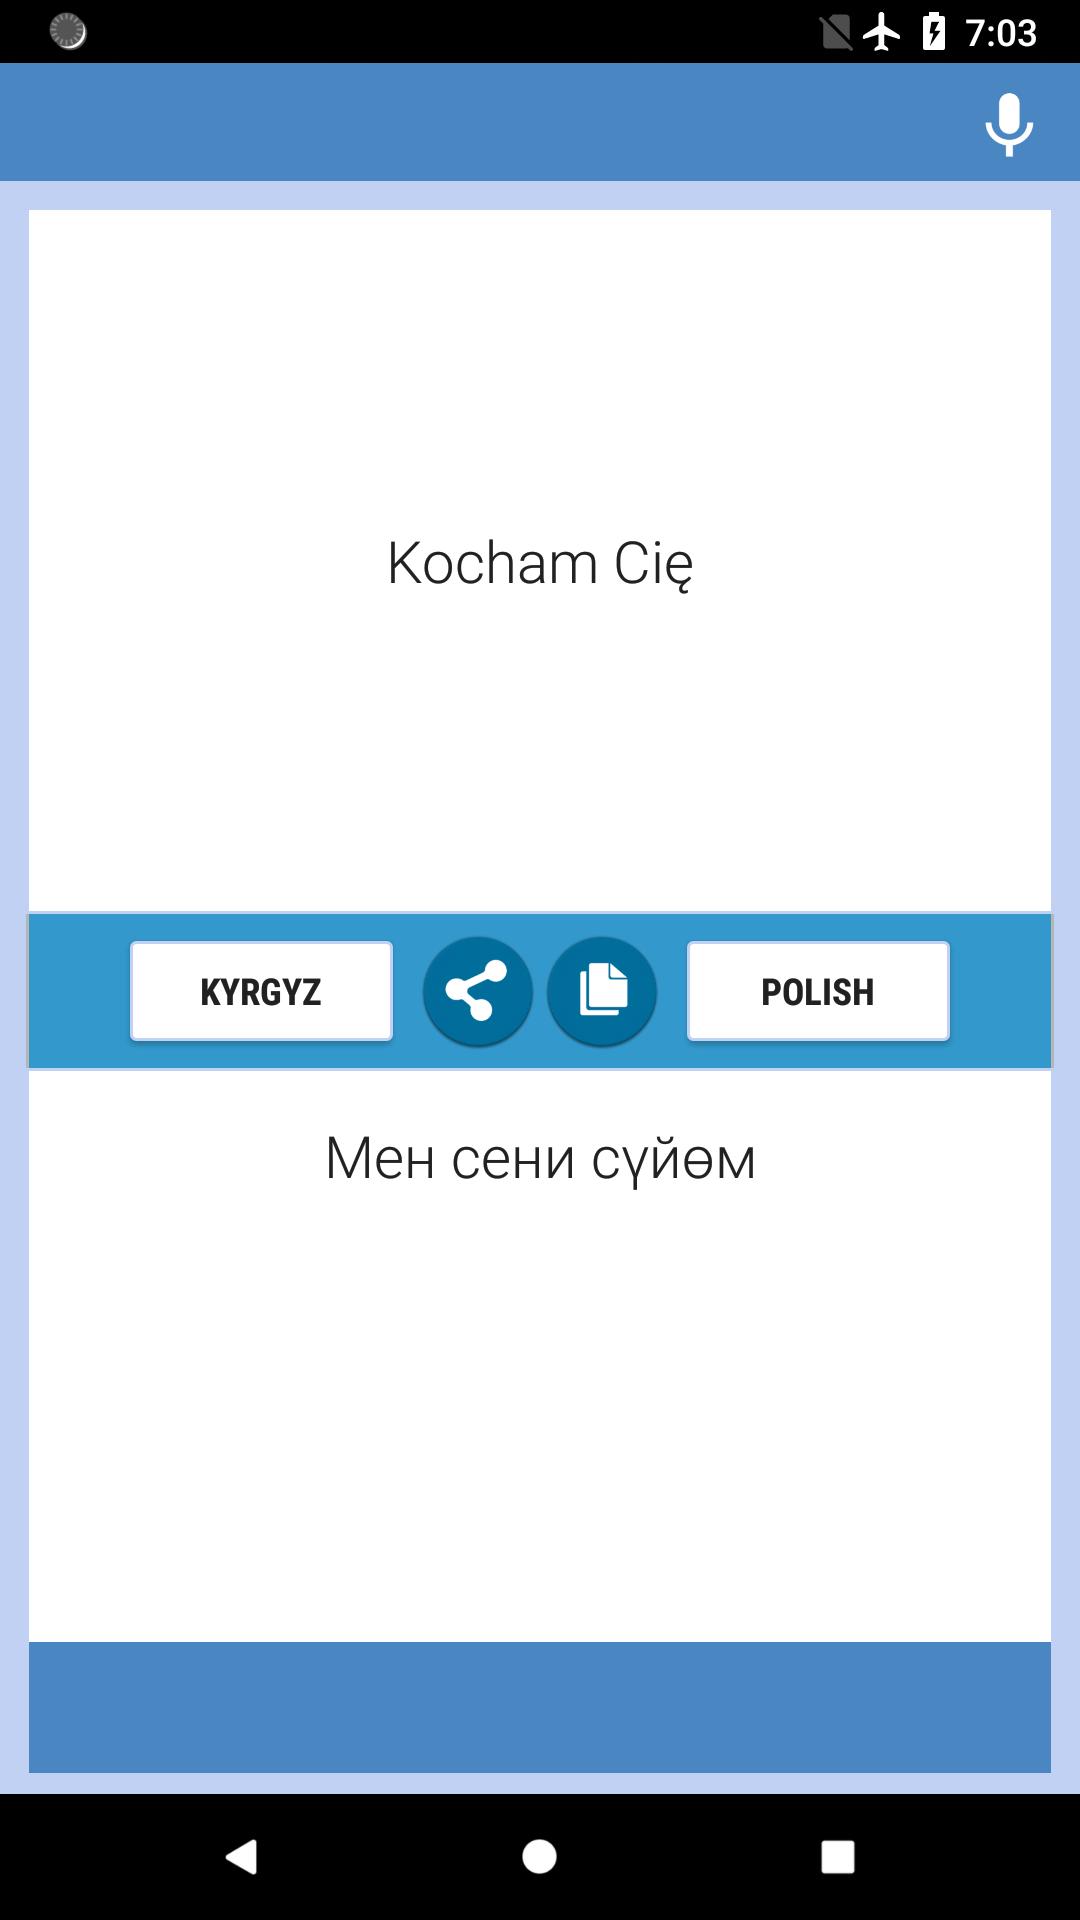 Tłumacz Kirgiski-Polski for Android - APK Download